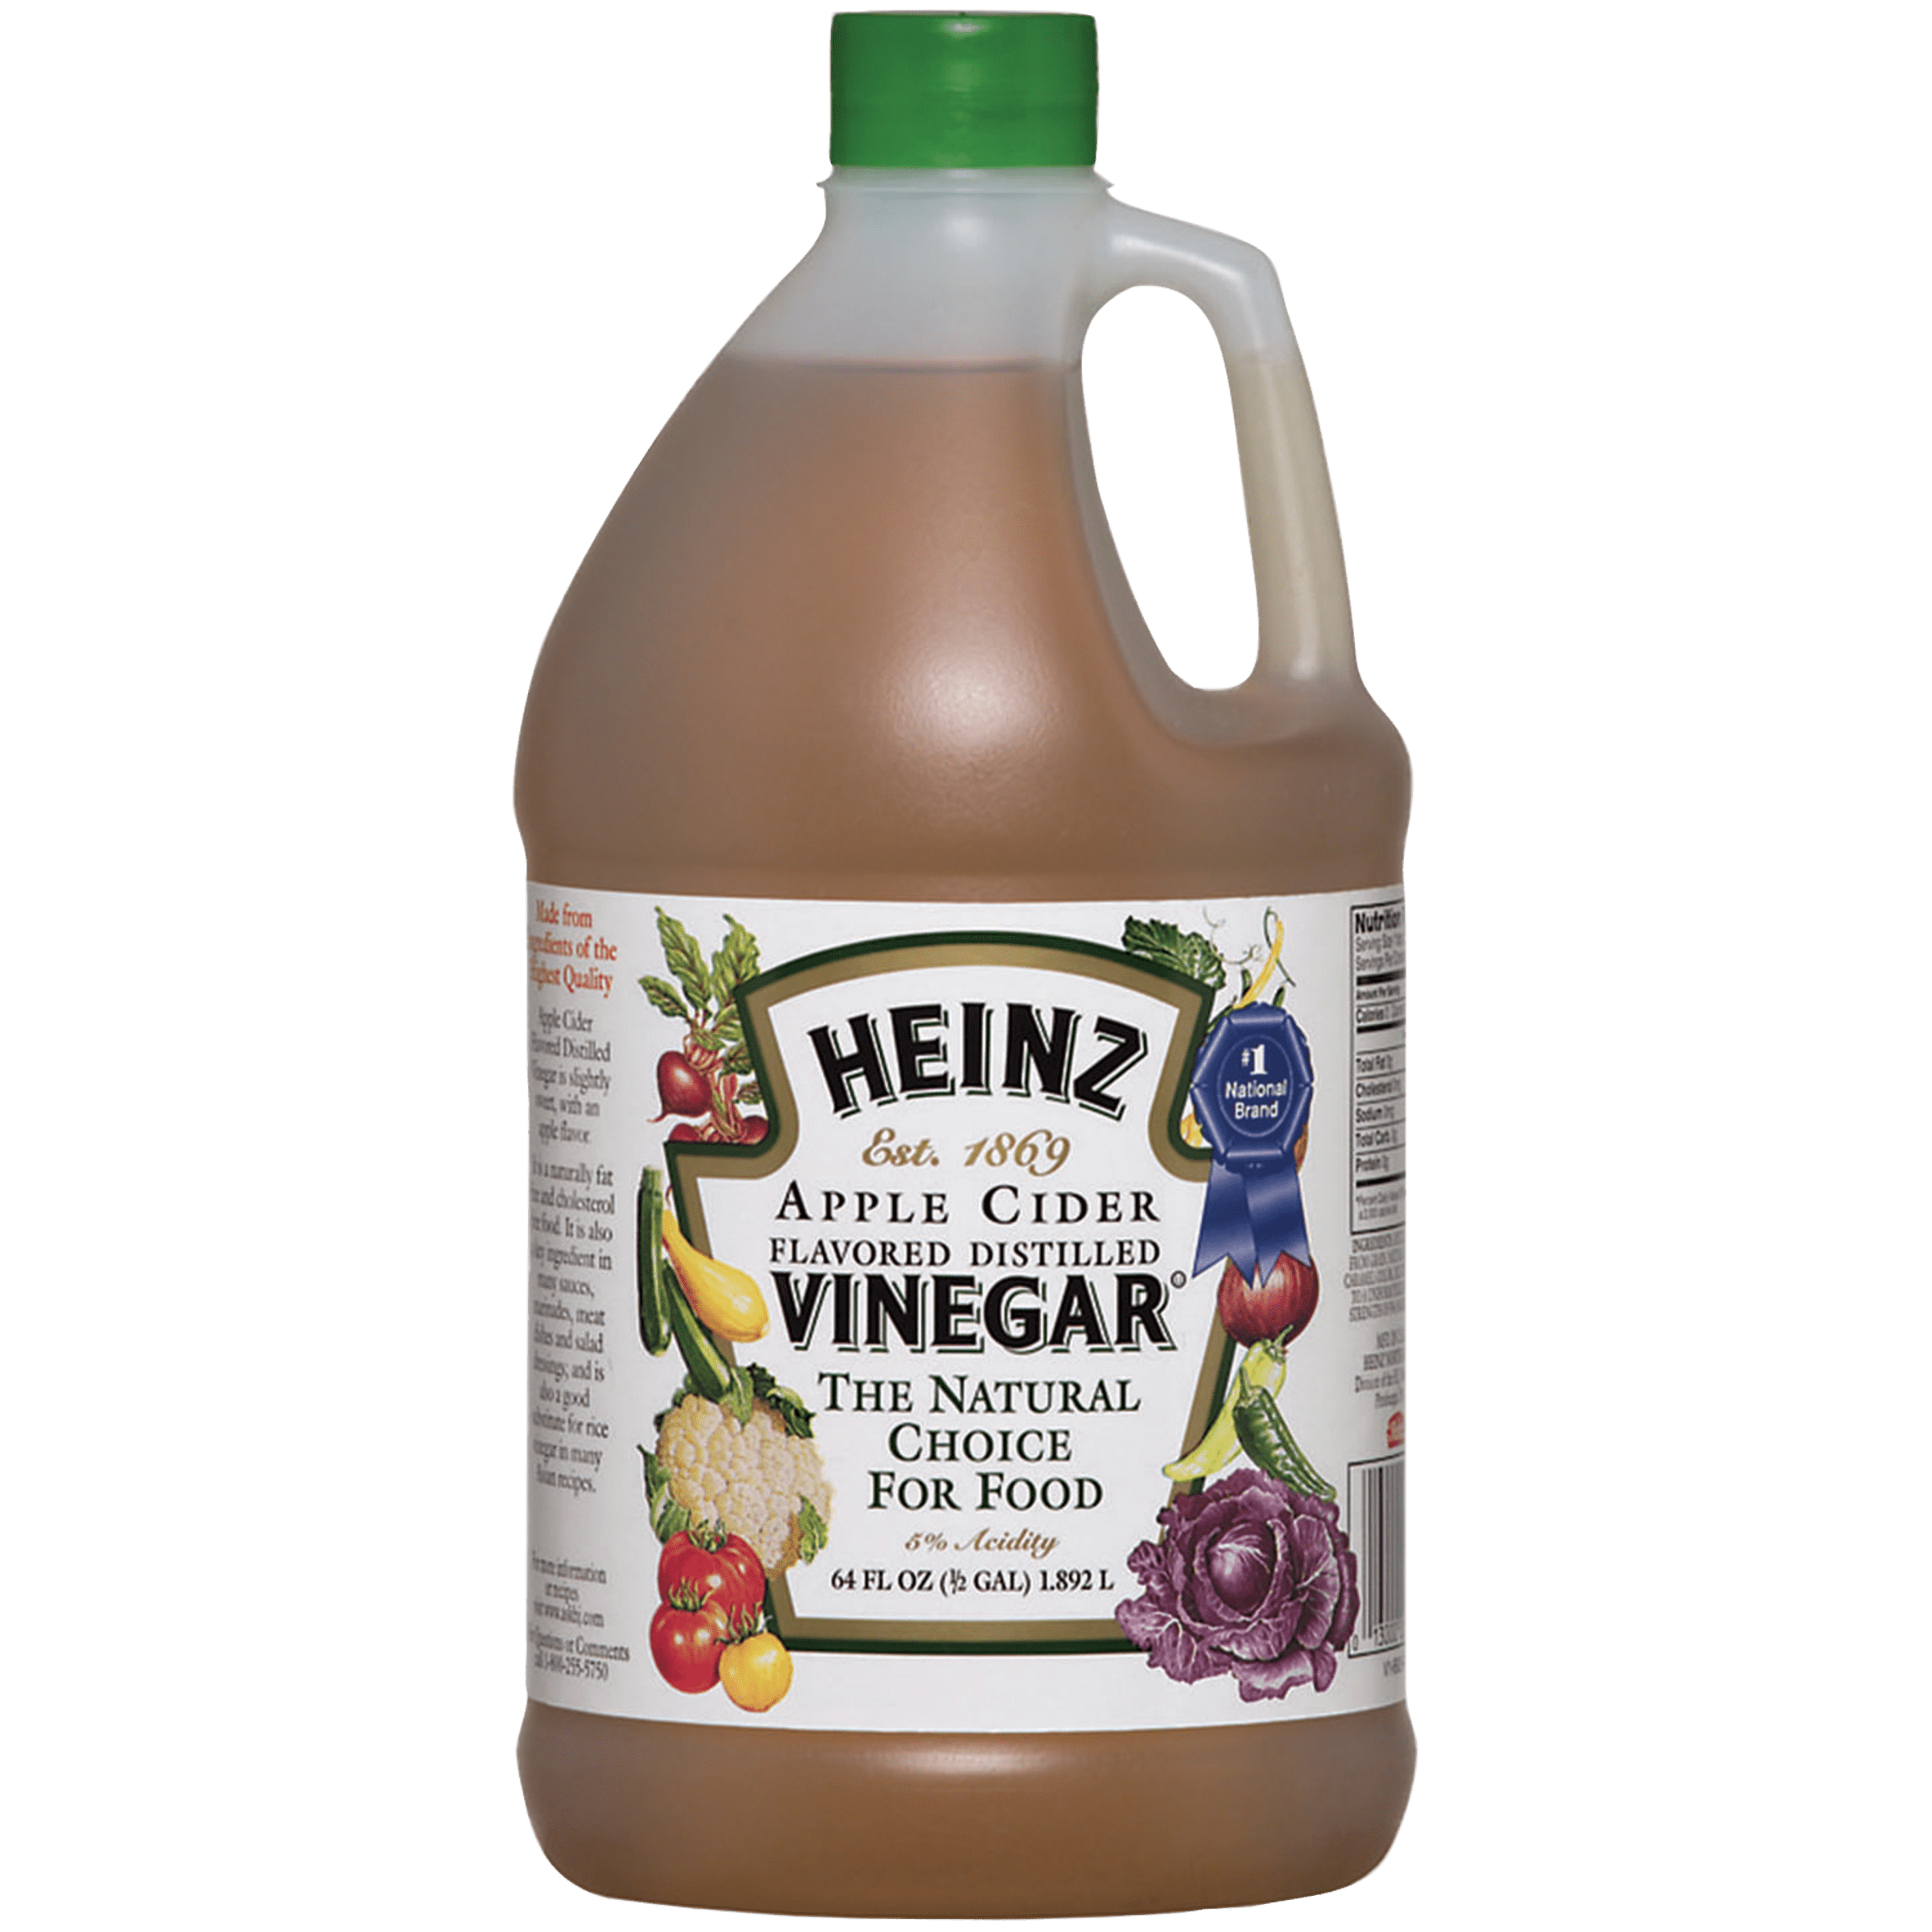 Apple Cider Vinegar with 5% Acidity